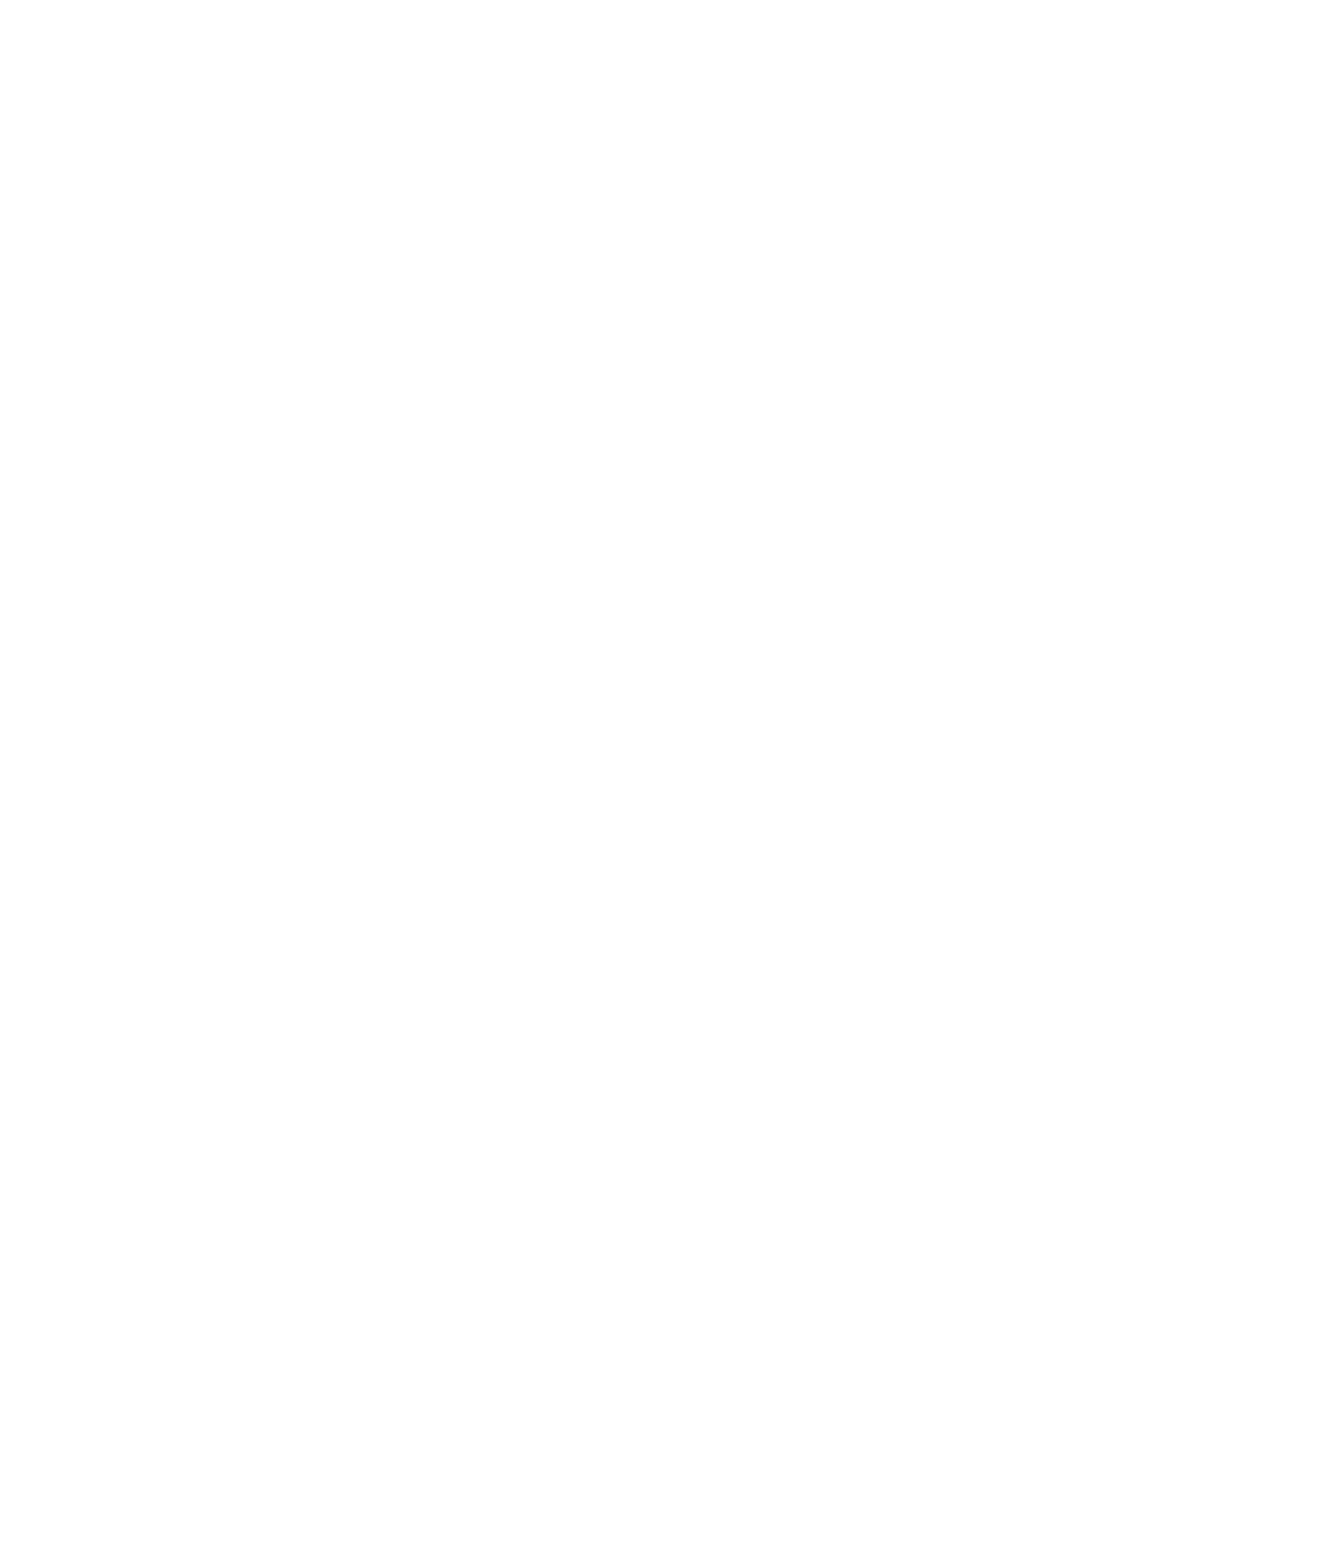 Gatos Silver logo pour fonds sombres (PNG transparent)